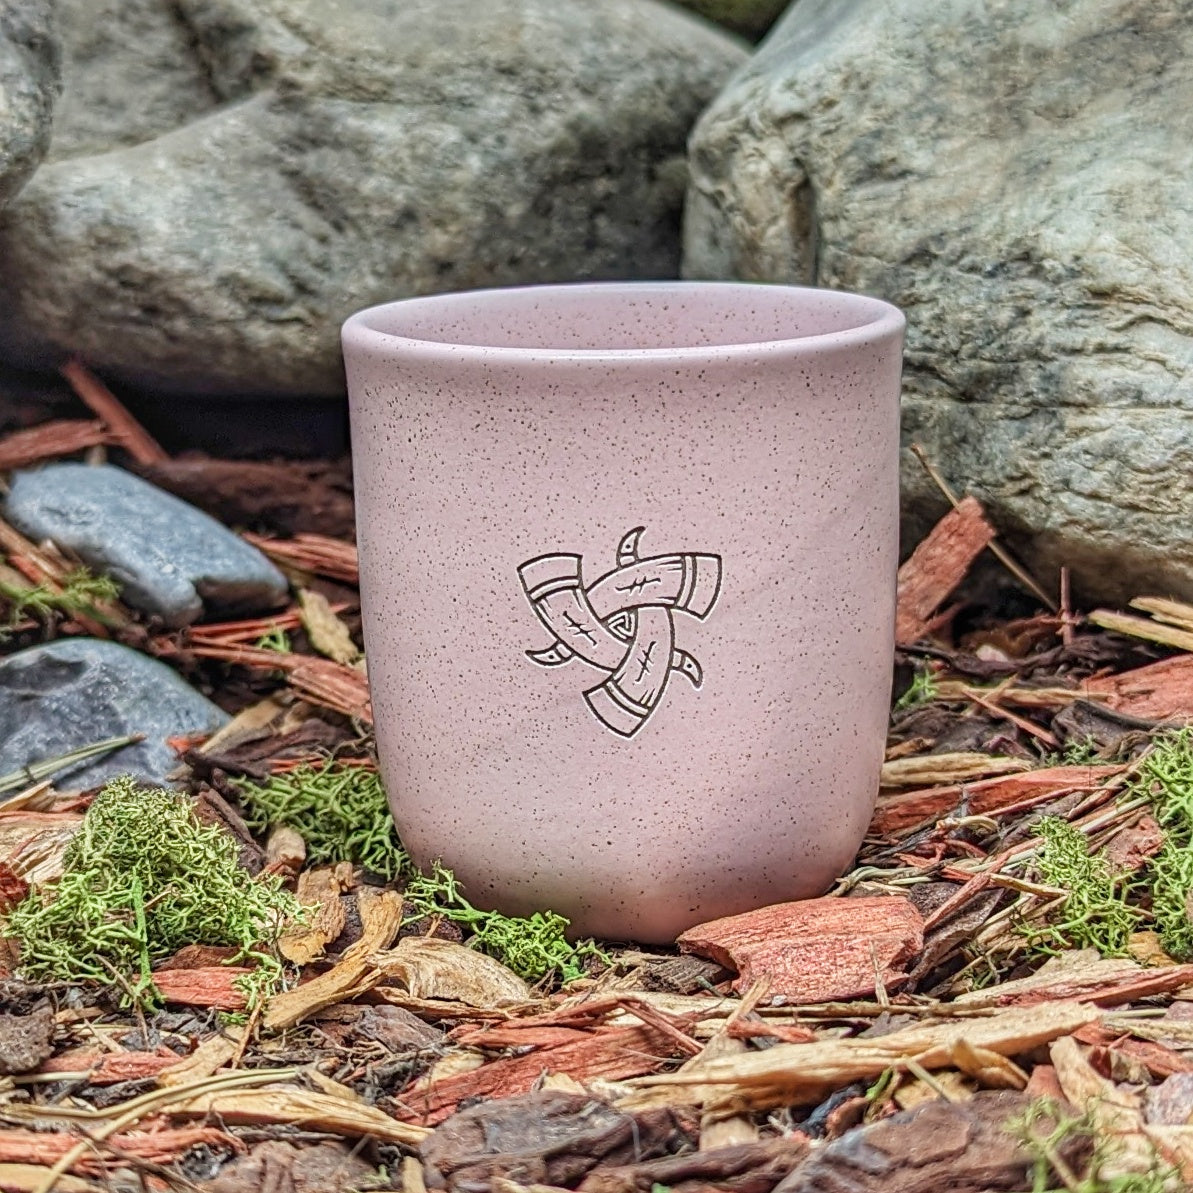 Freya's Cup